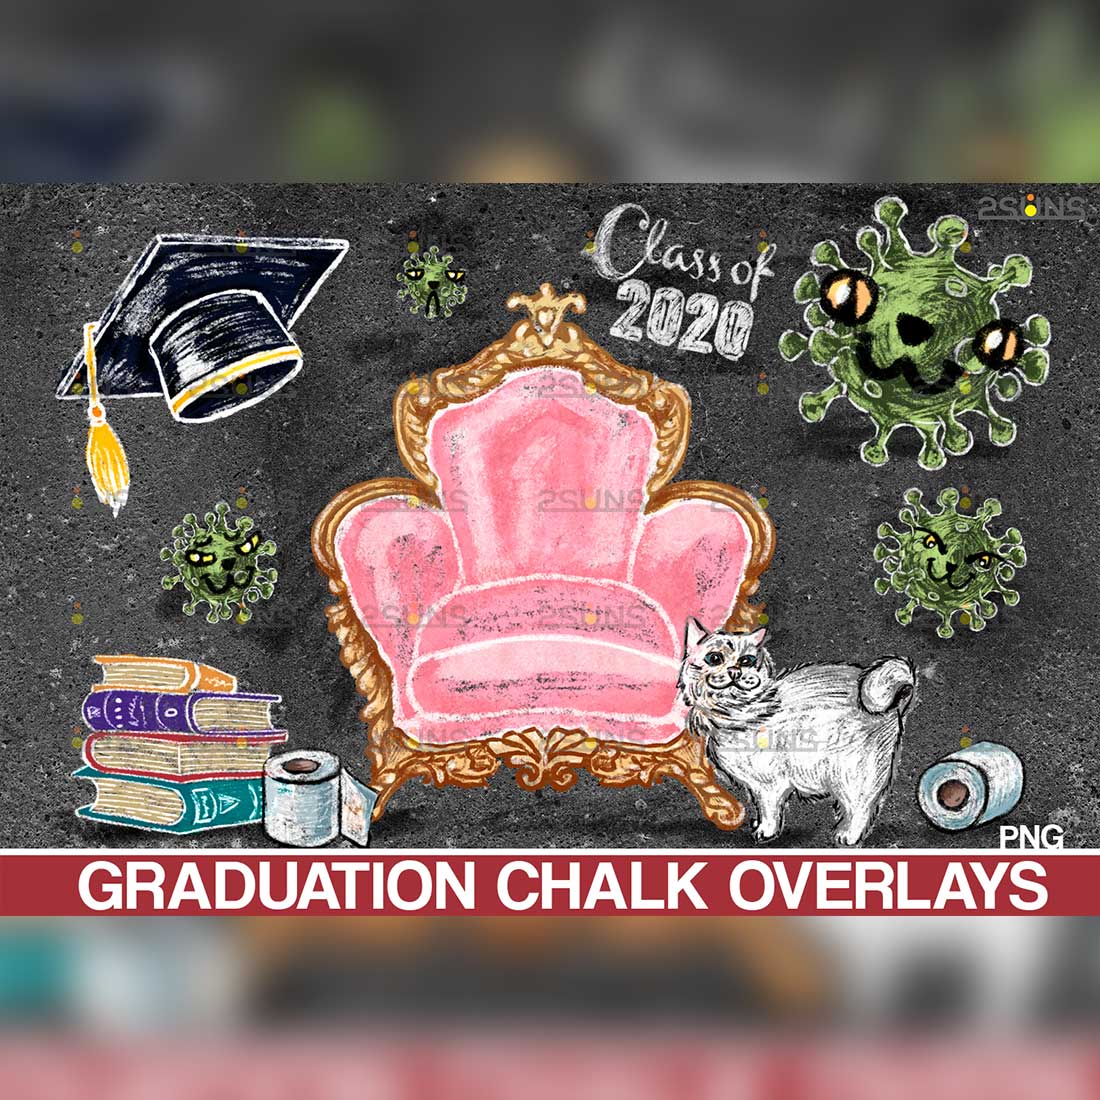 Graduation Sidewalk Chalk Art Overlays cover image.